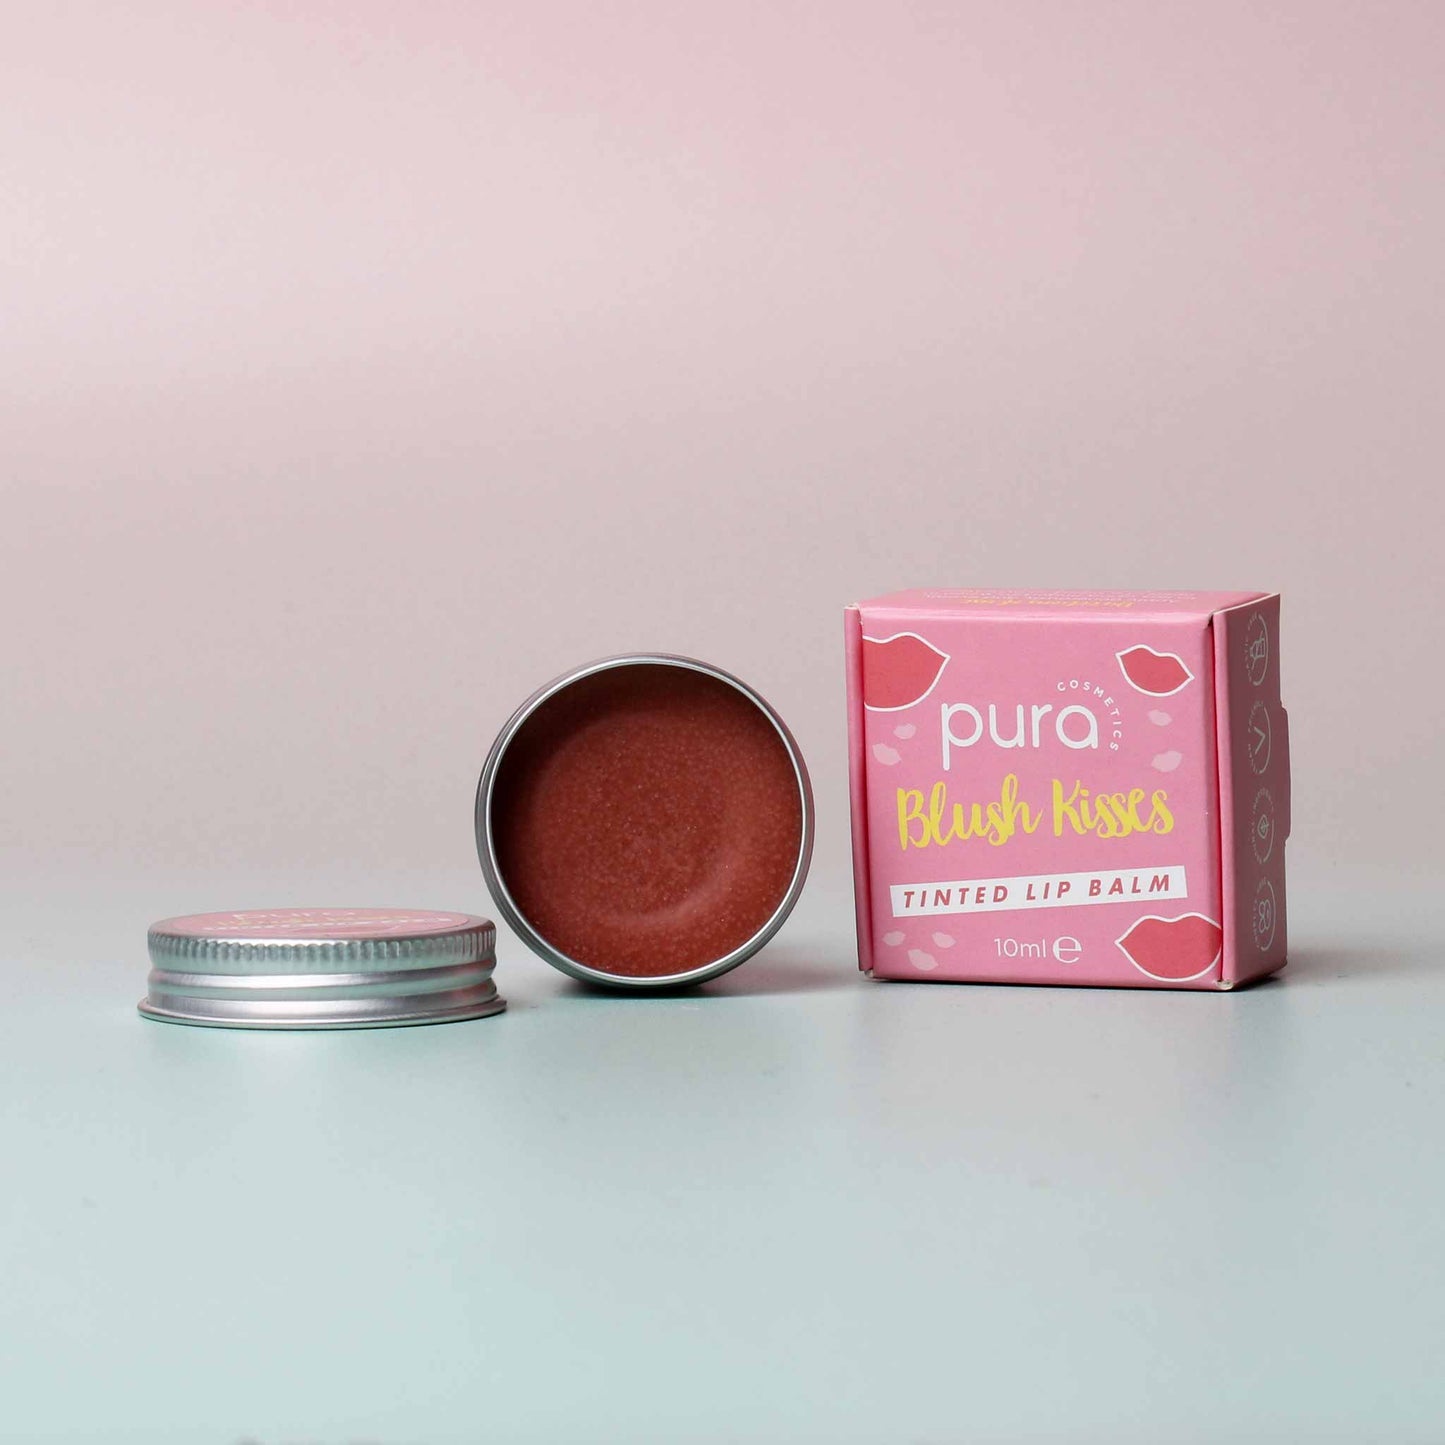 Pura Cosmetics Blush Kisses Tinted Lip Balm. Vegan, cruelty free, plastic free, small batch and UK made.